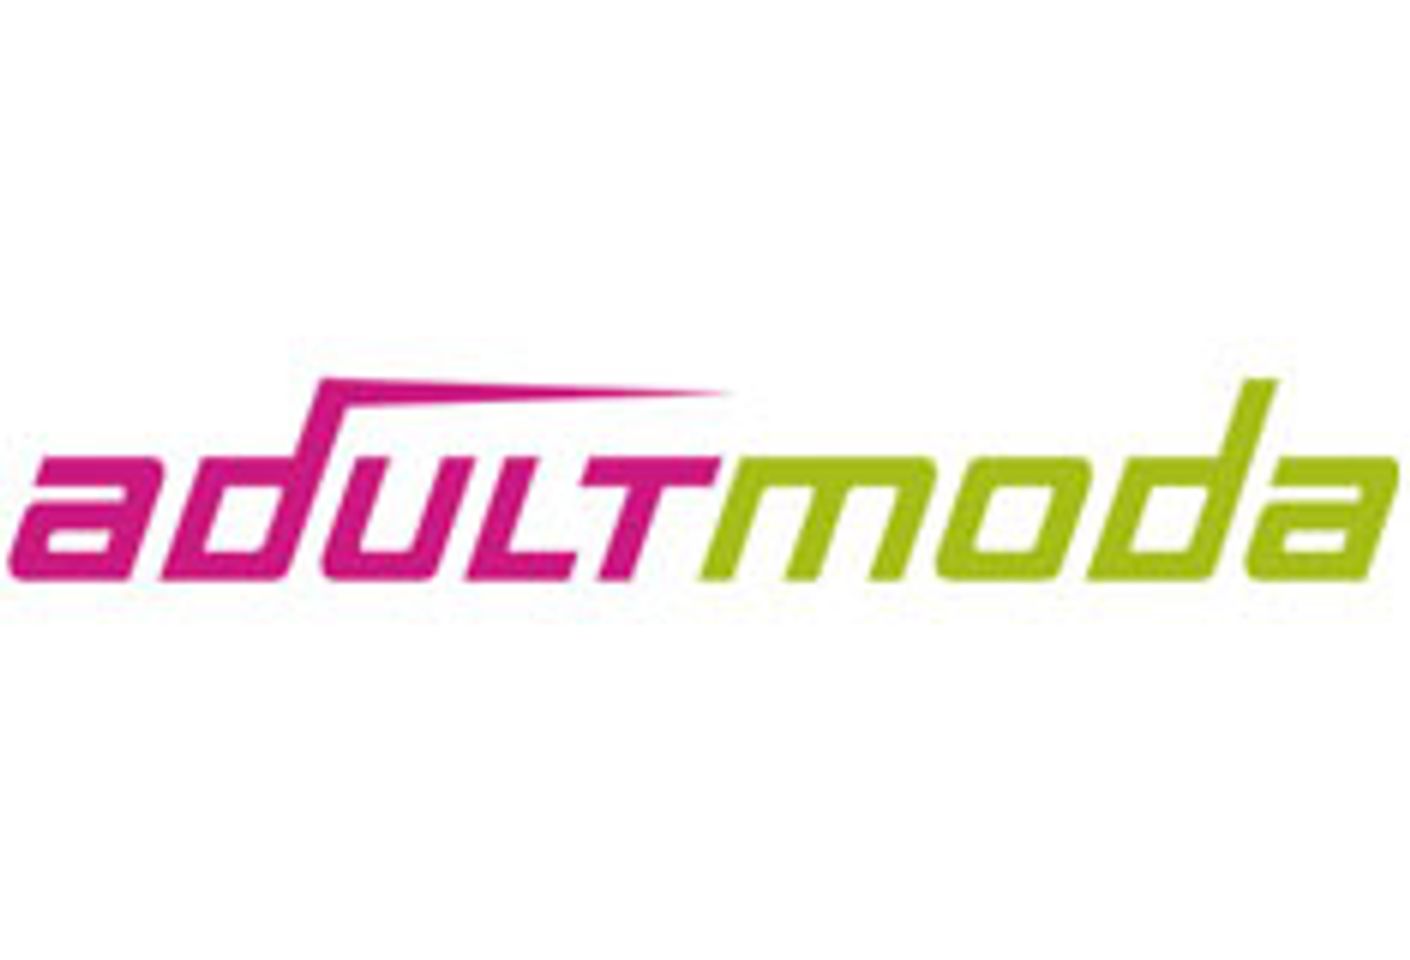 Adultmoda Launches Keyword/Tag-Based Targeting